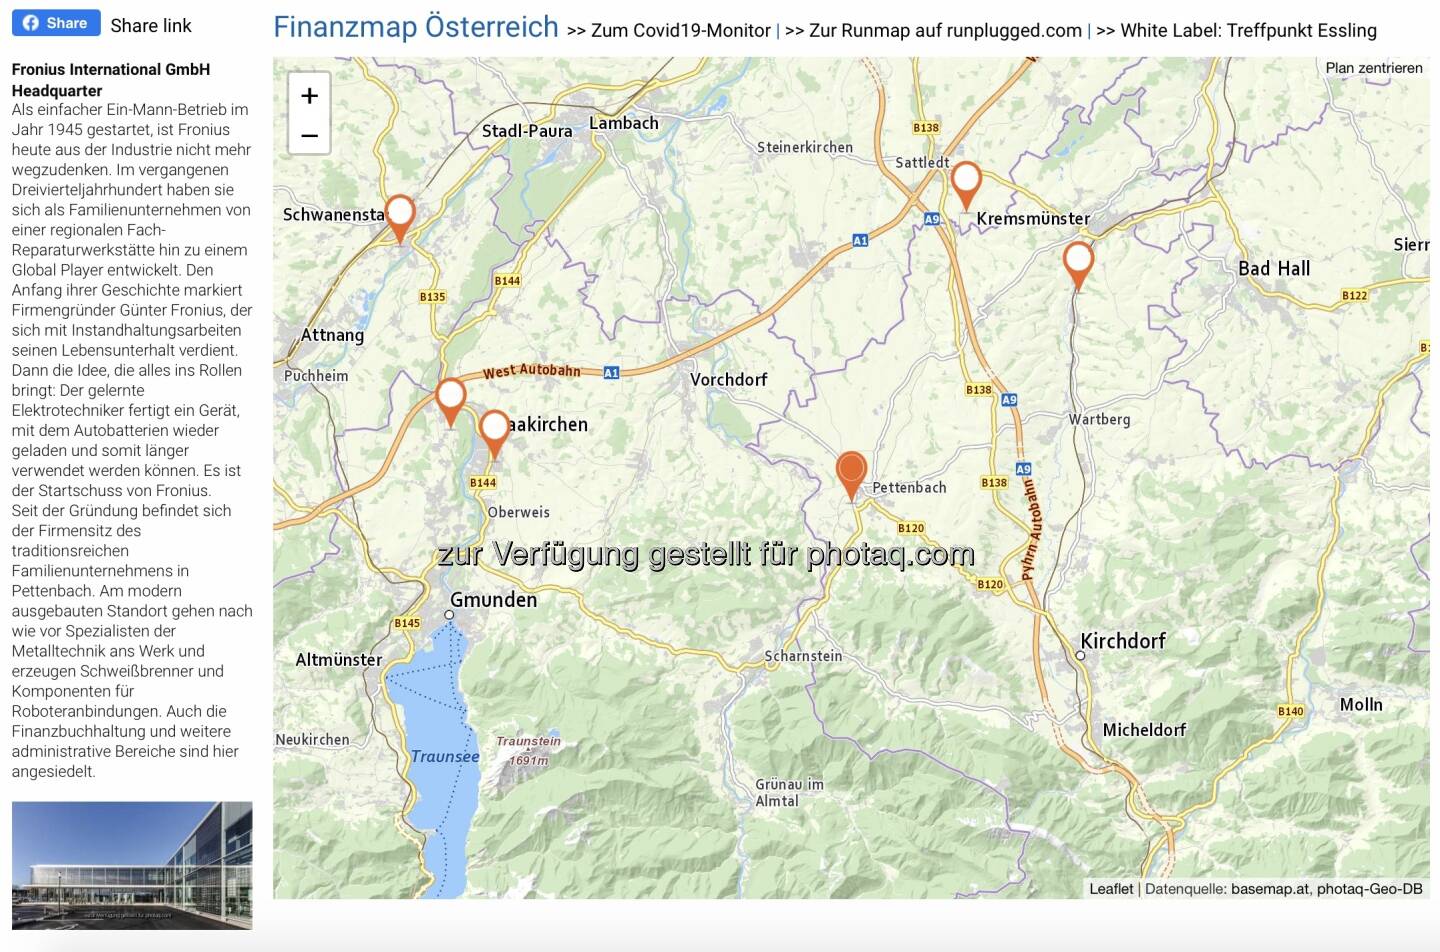 Fronius International GmbH Headquarter auf http://www.boerse-social.com/finanzmap